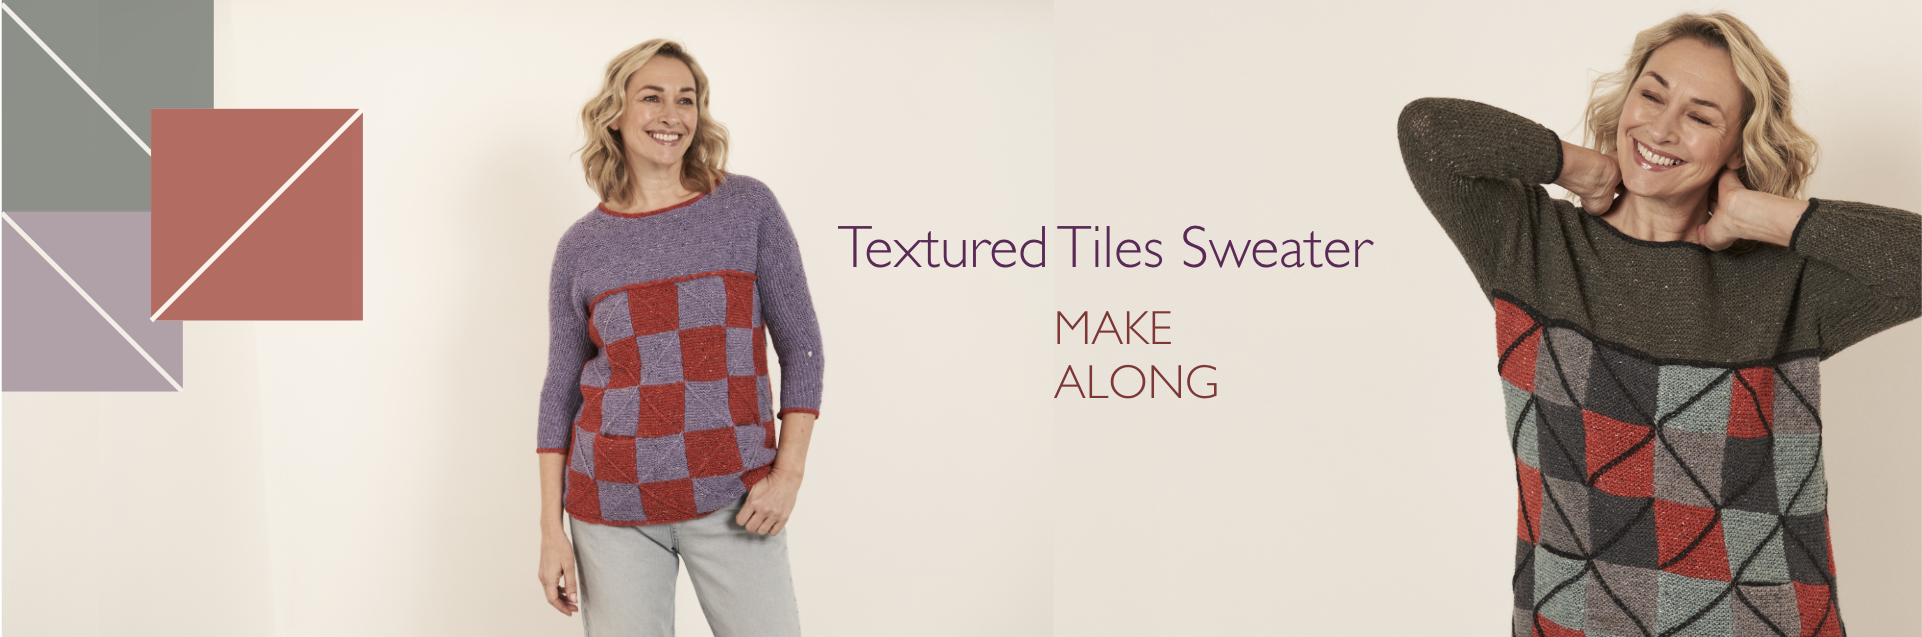 Textured Tiles Sweater banner